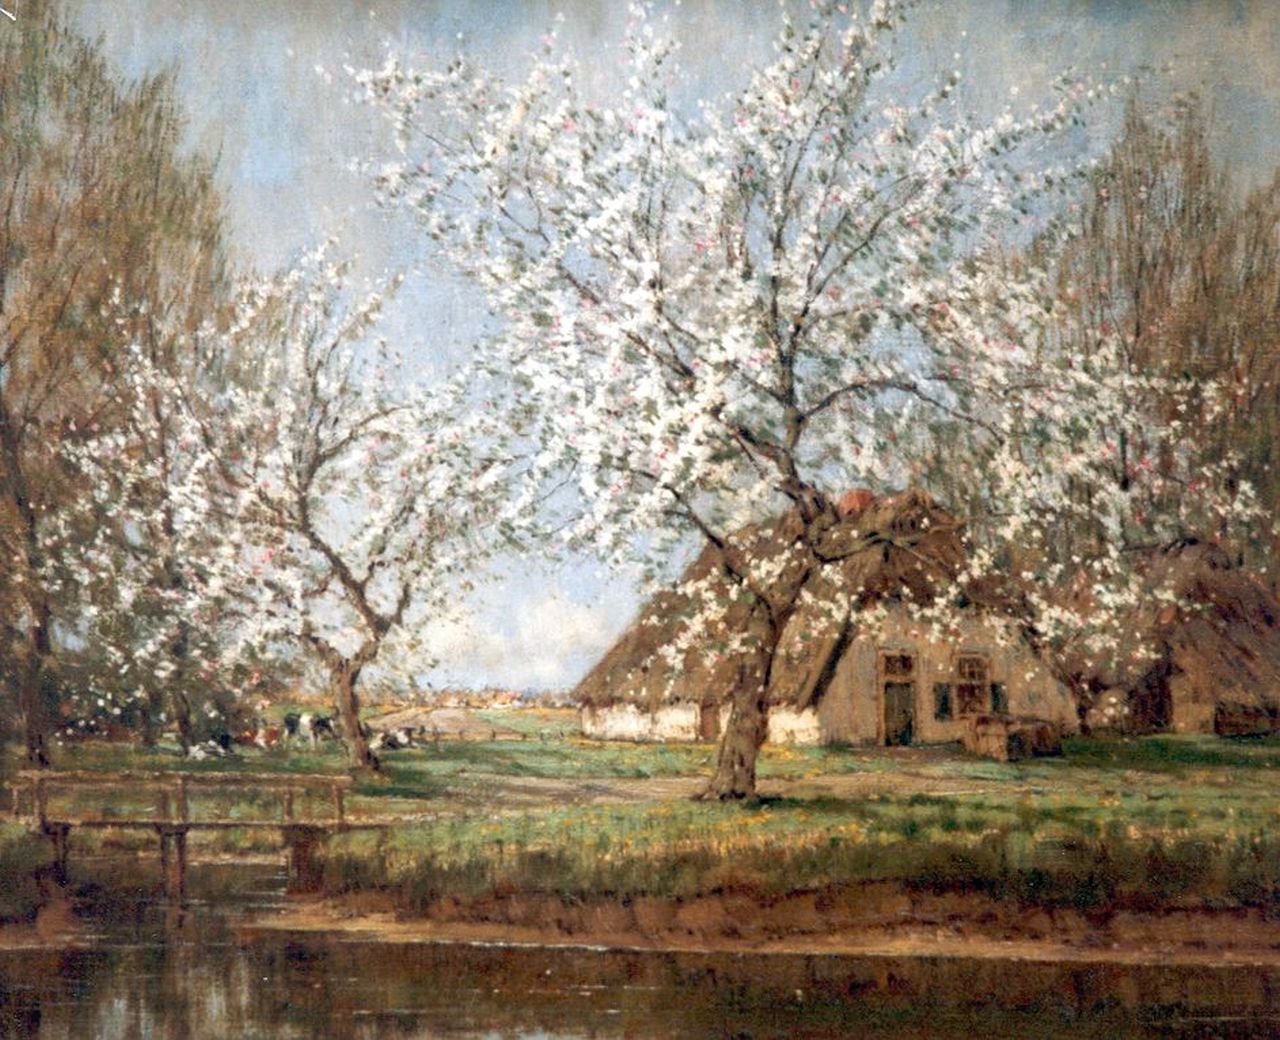 Gorter A.M.  | 'Arnold' Marc Gorter, Blossoming trees, Öl auf Leinwand 56,3 x 76,3 cm, signed l.r.